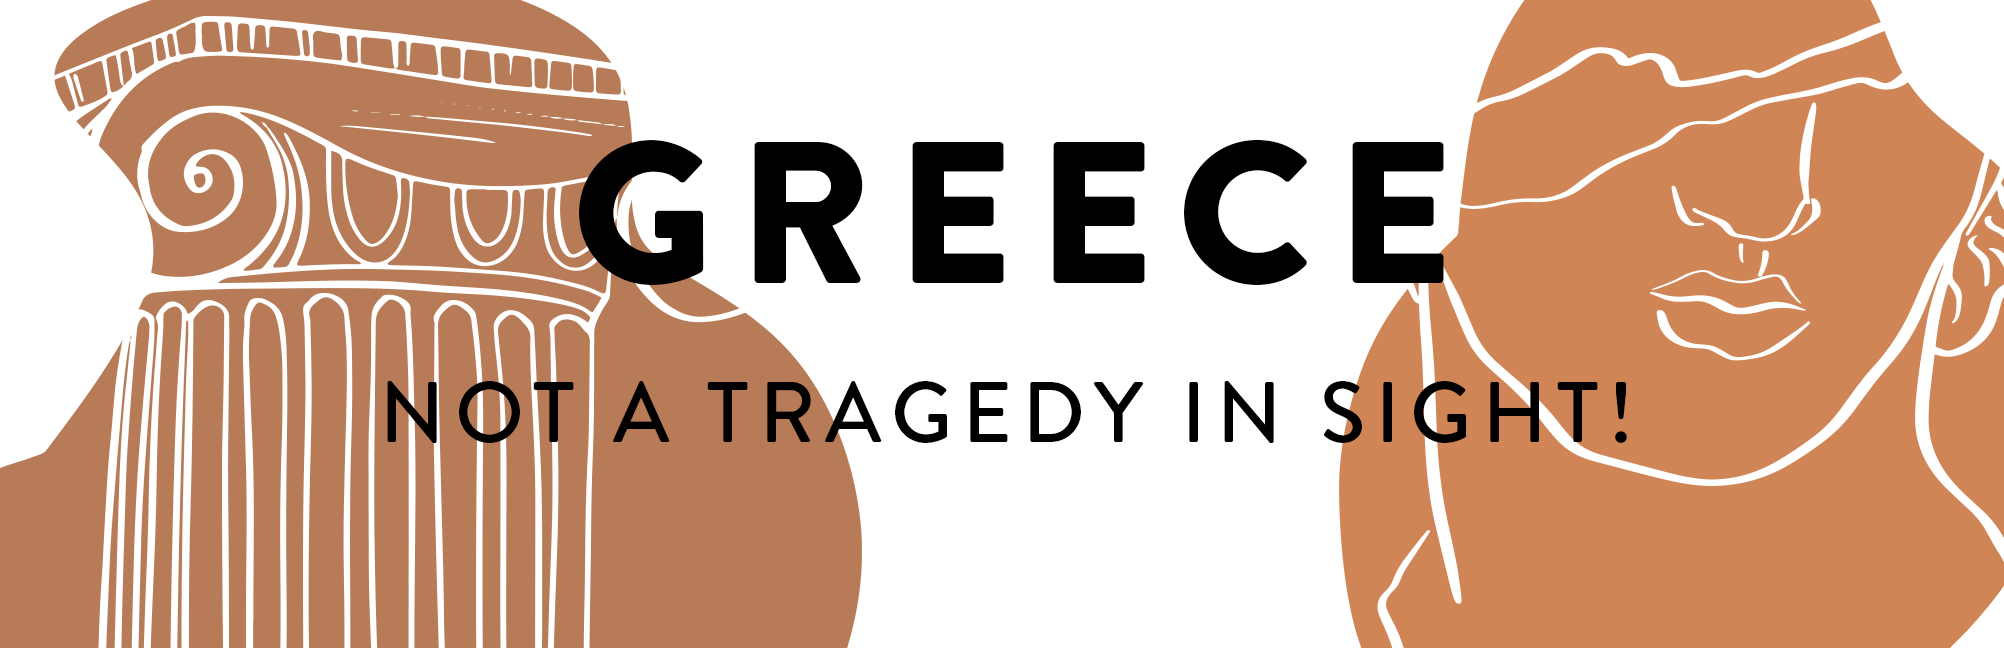 New Wine Greece